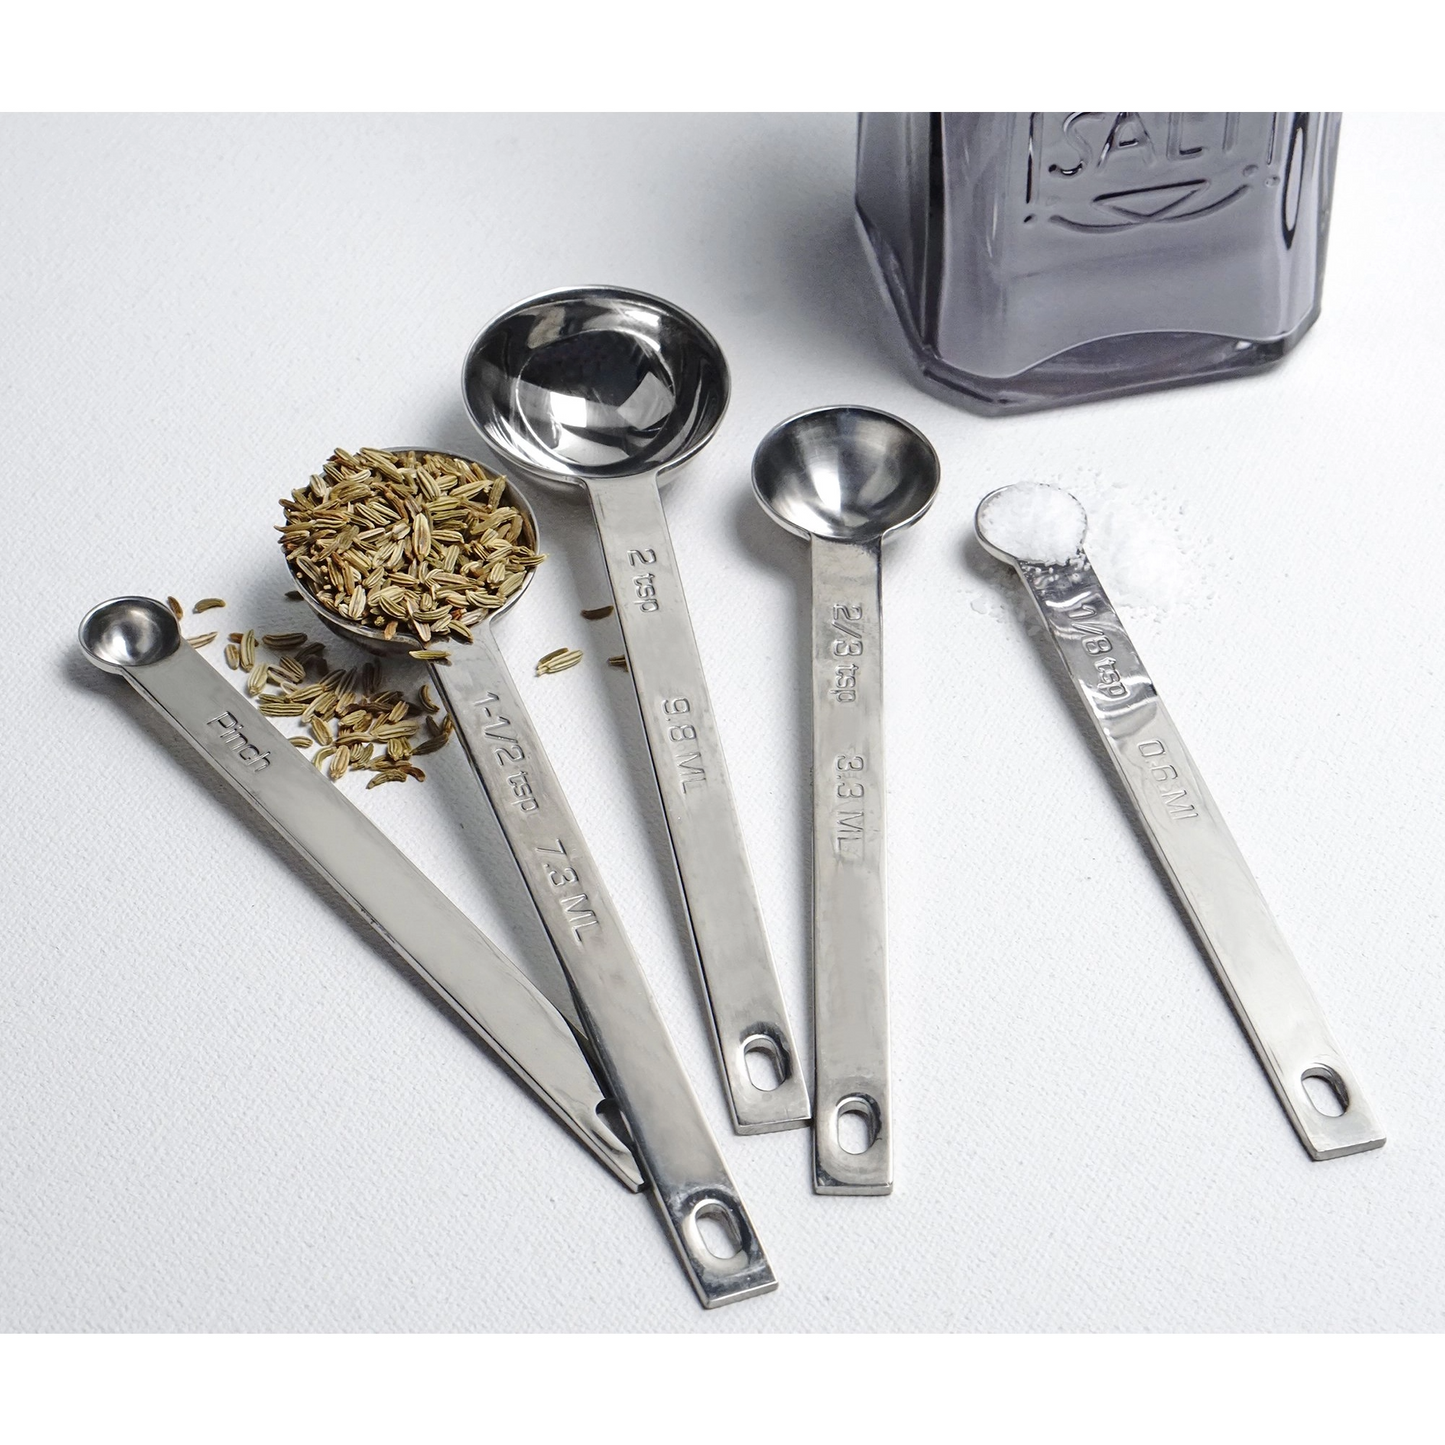 Stainless Steel Measuring Spoons Set of 5